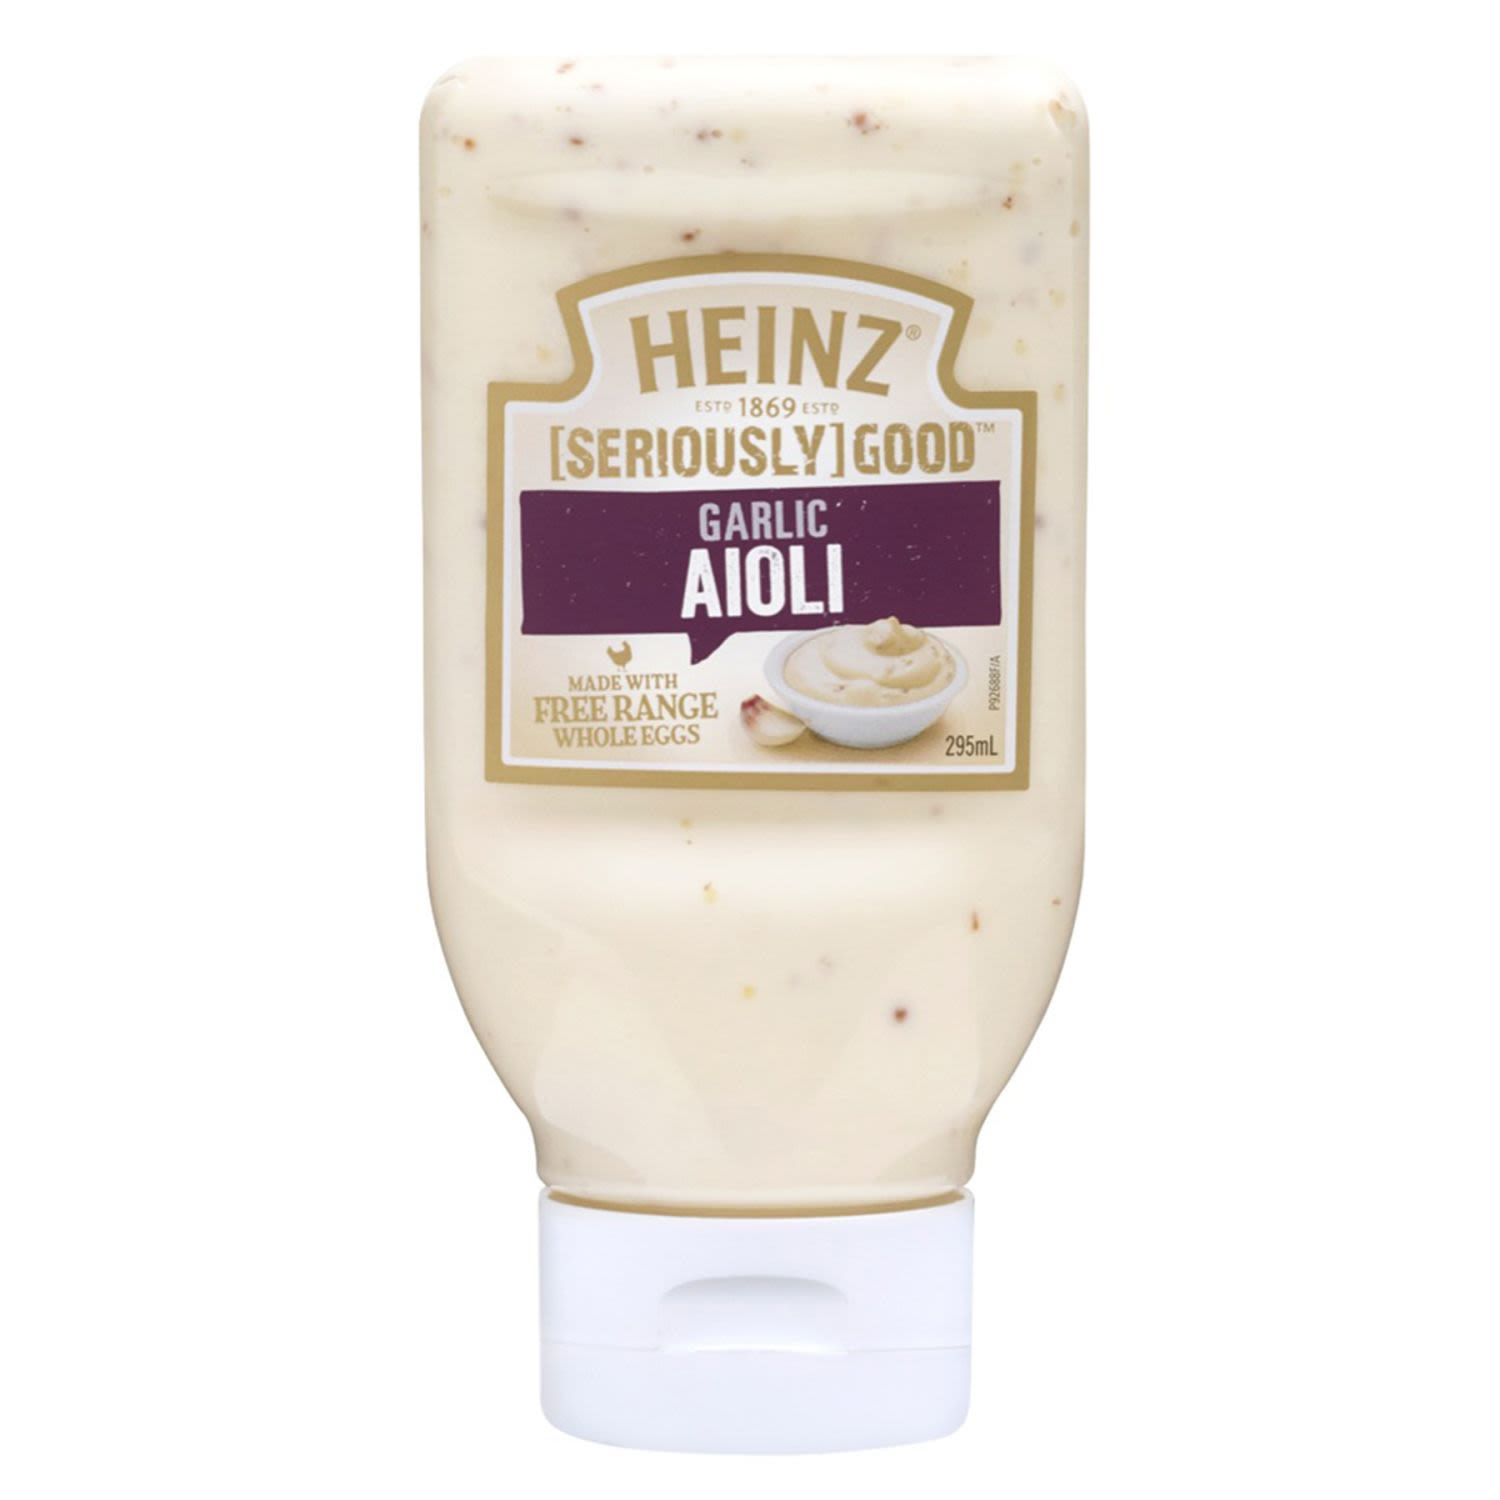 Heinz [Seriously] Good Aioli Garlic Mayonnaise, 295 Millilitre